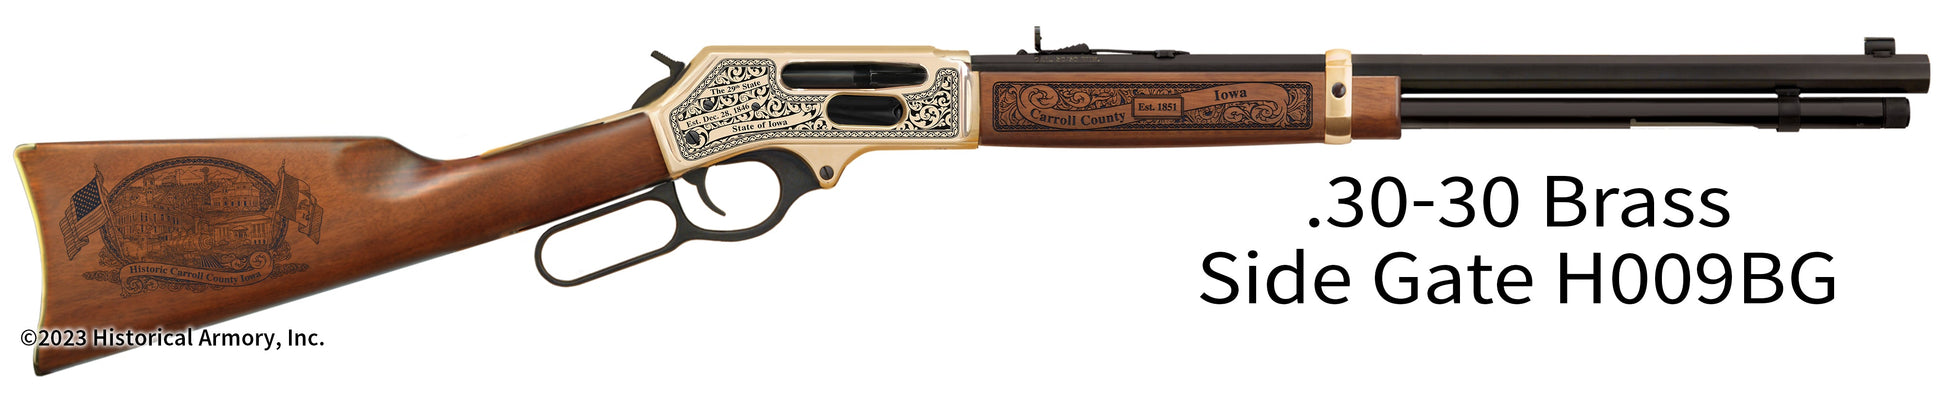 Carroll County Iowa Engraved Henry .30-30 Brass Side Gate Rifle